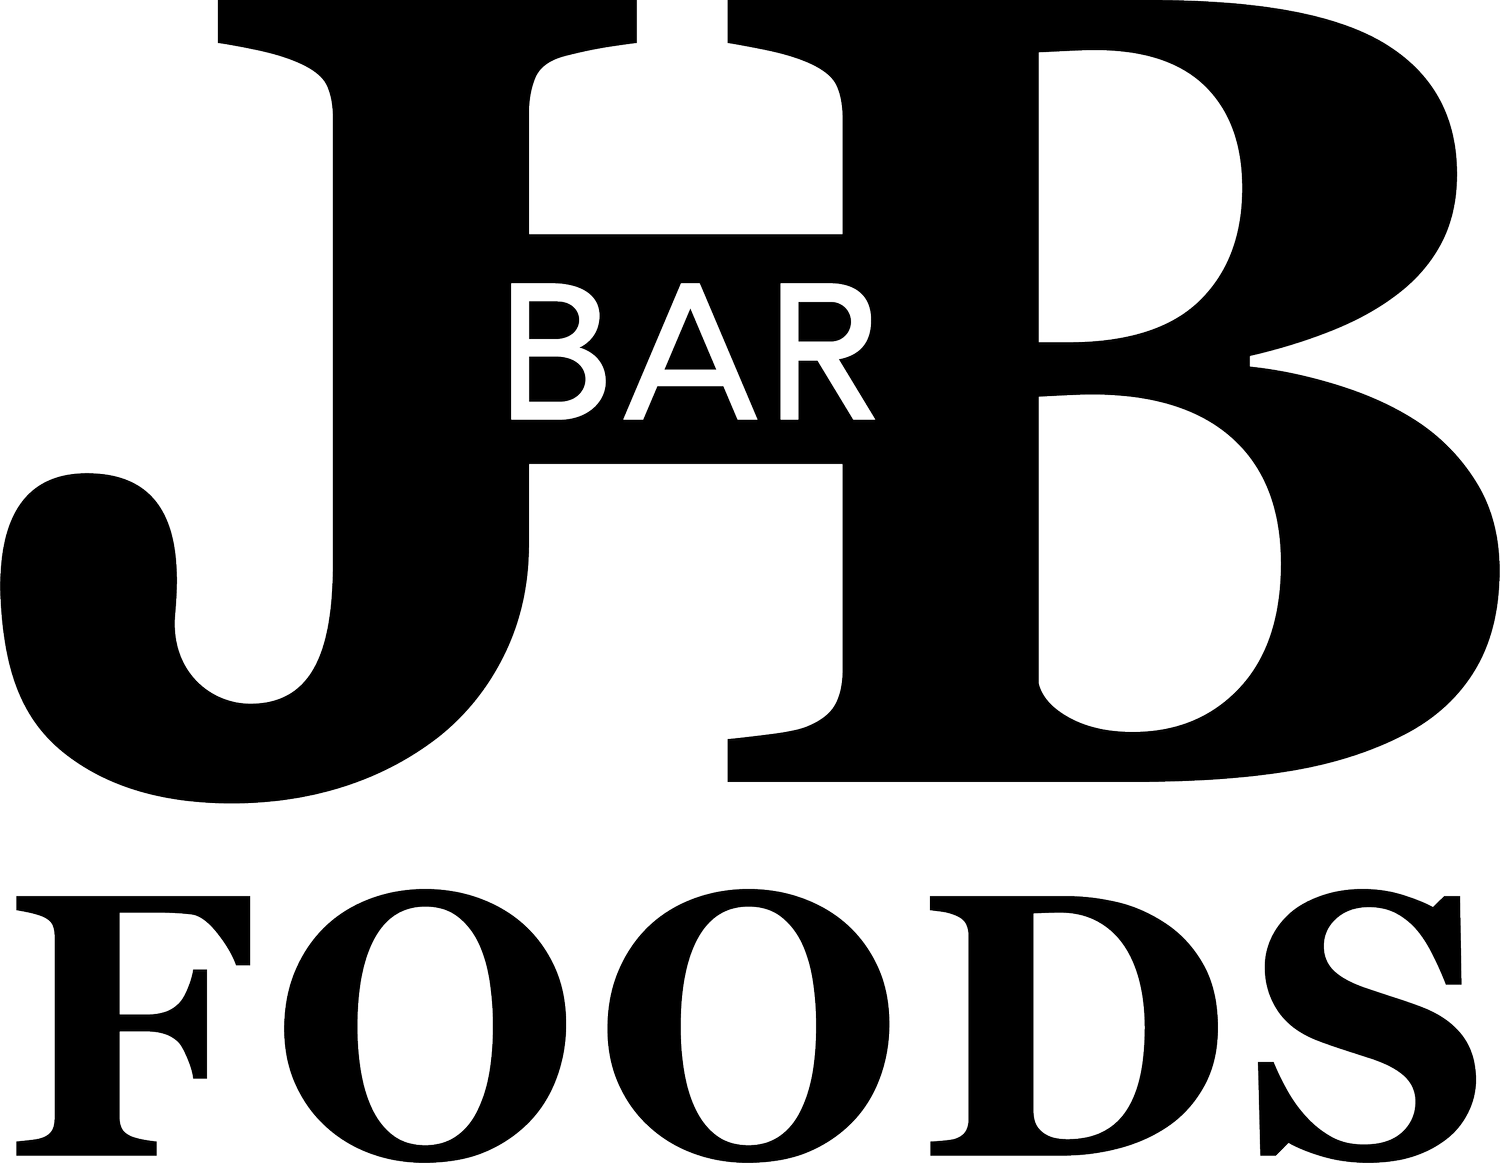 J Bar B Foods 